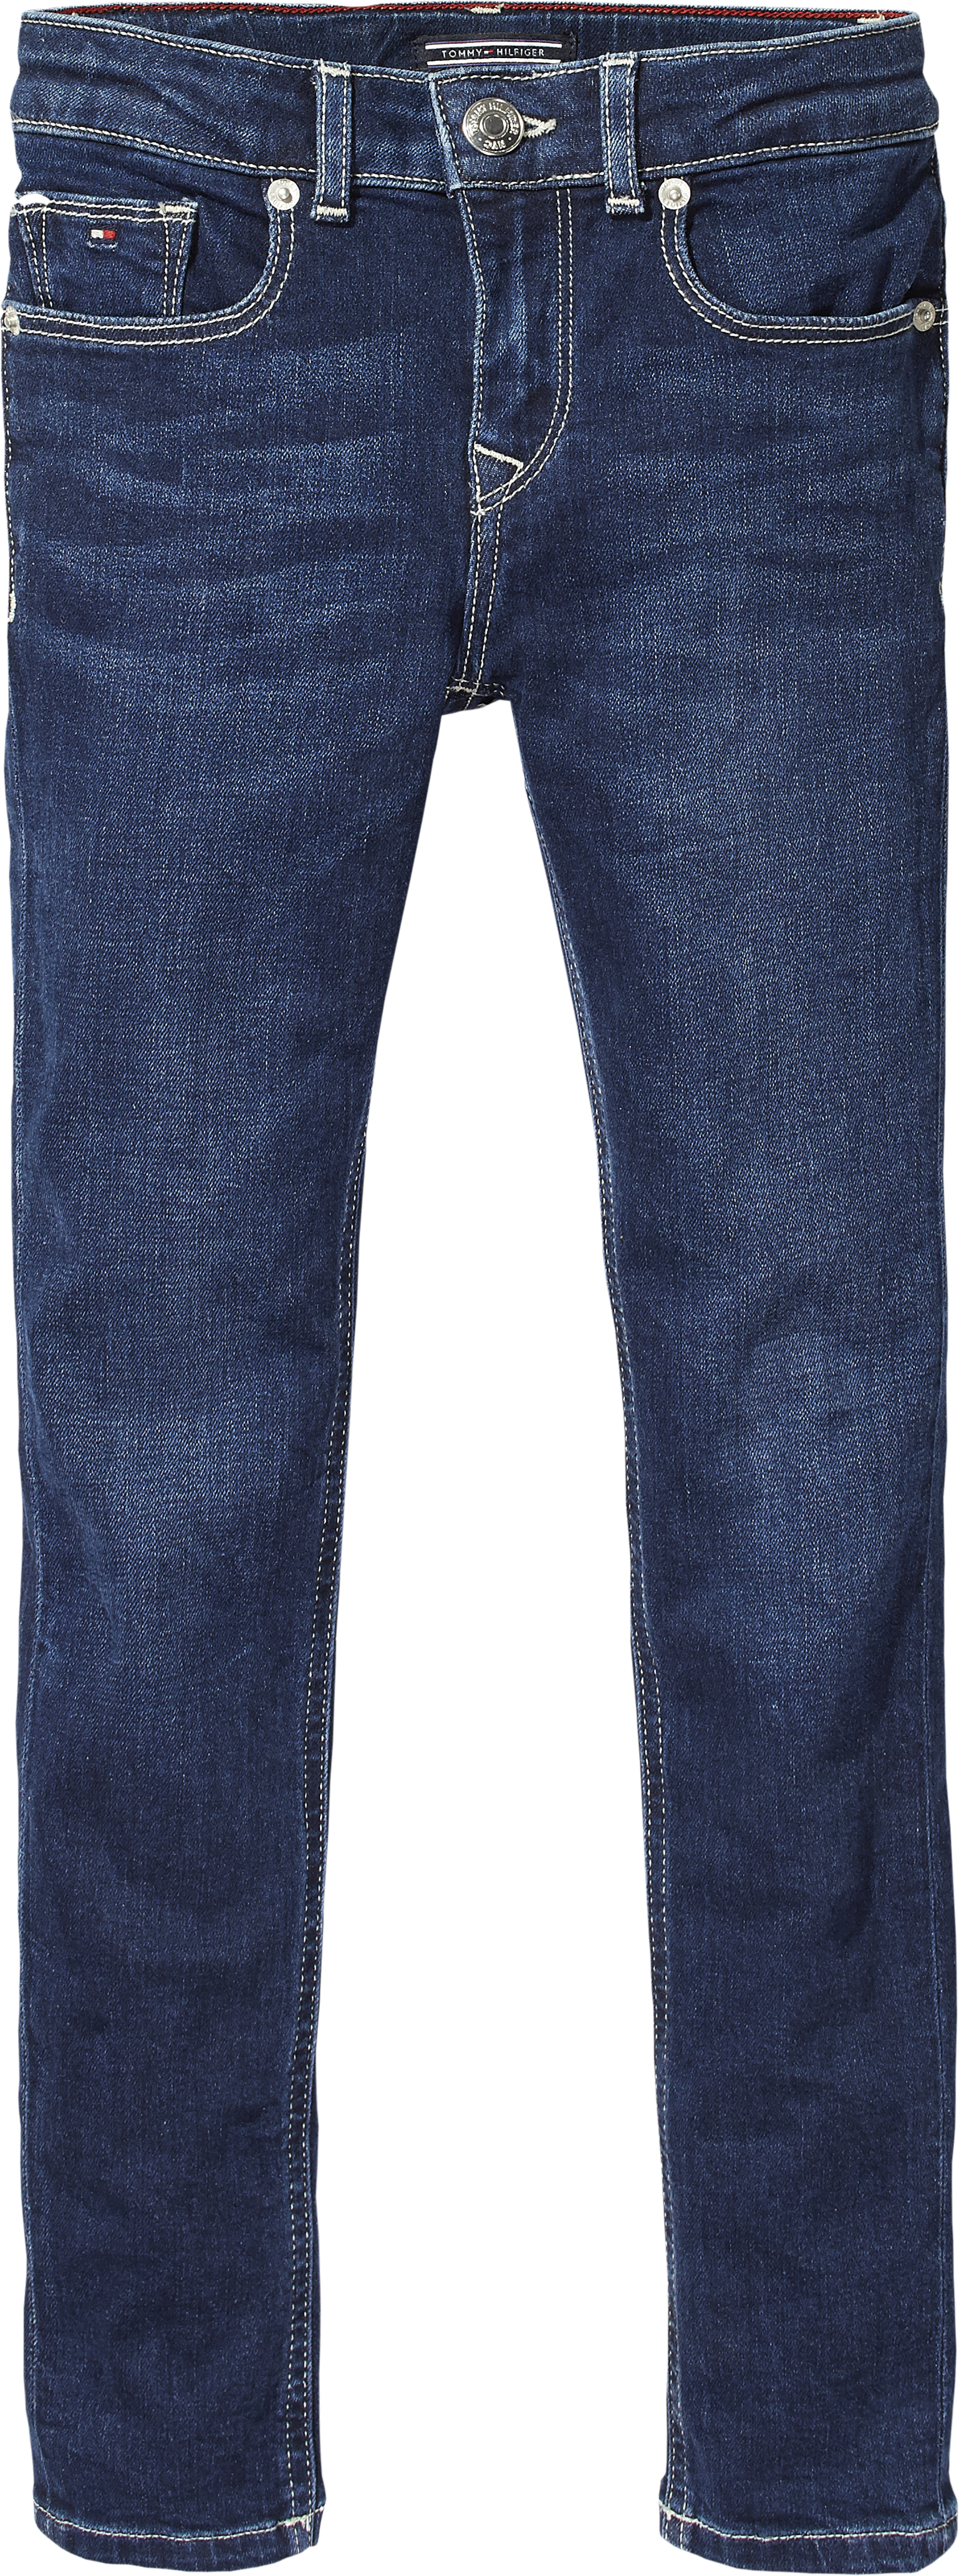 Nora Skinny Jeans, Mørkeblå, 74 cm